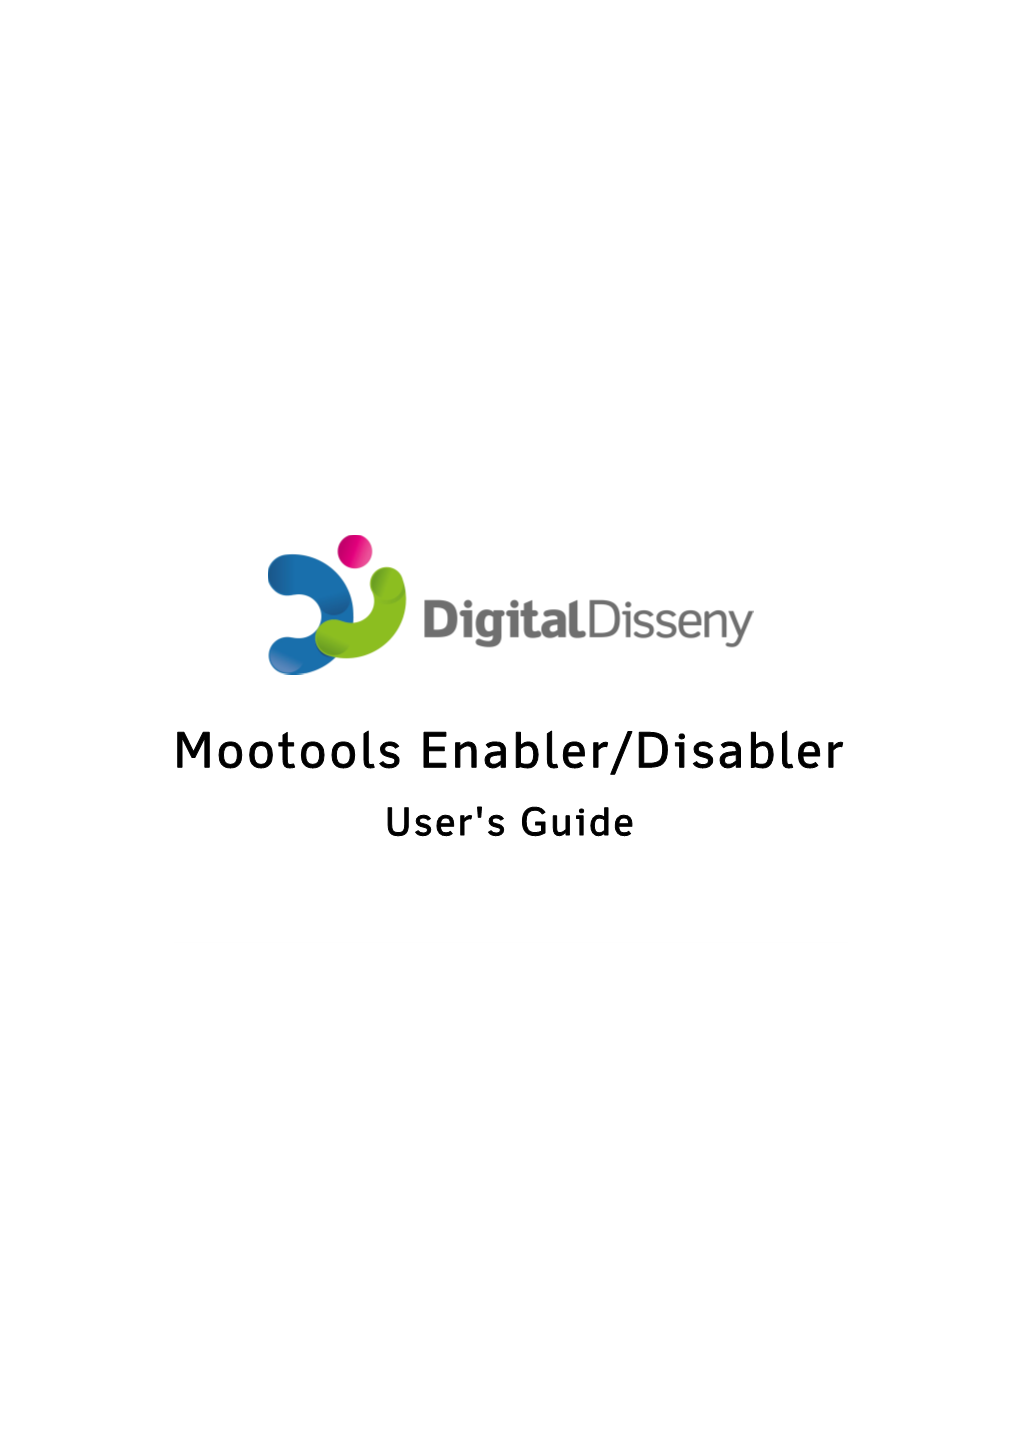 Mootools Enabler/Disabler User's Guide Mootools Enabler/Disabler - User's Guide